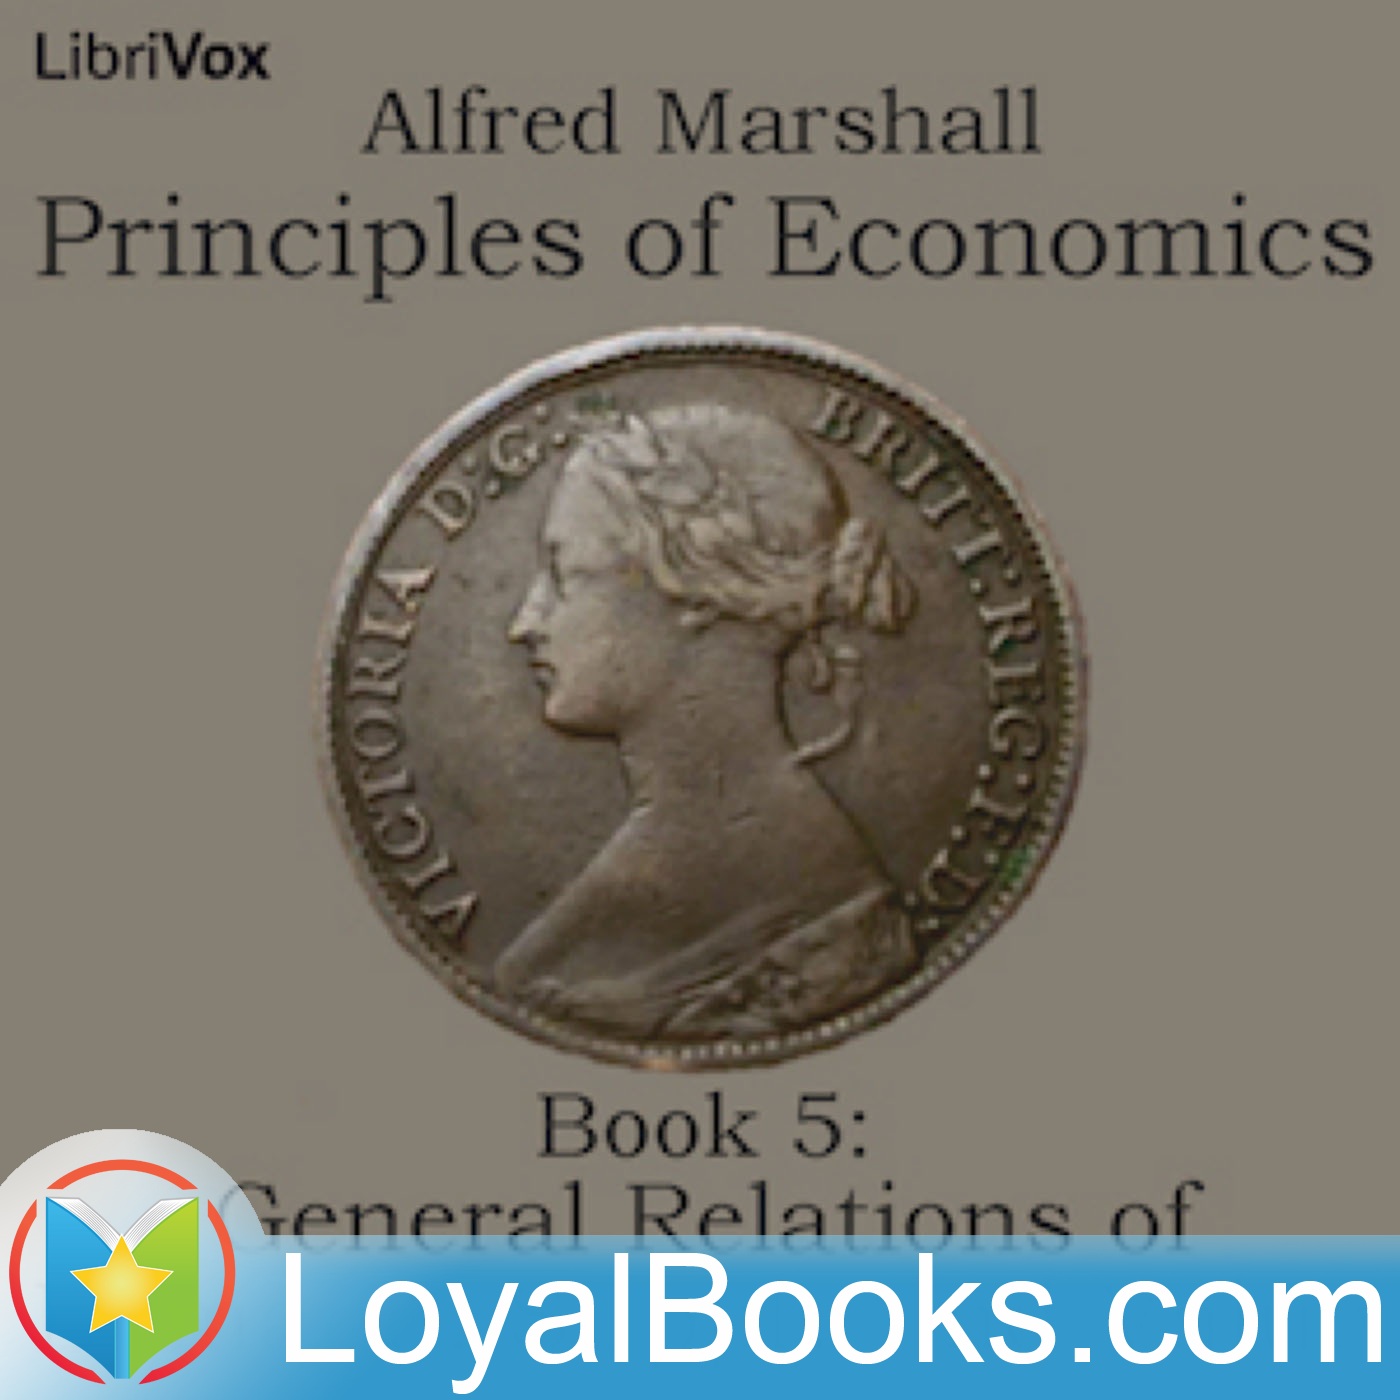 alfred marshall principles of economics